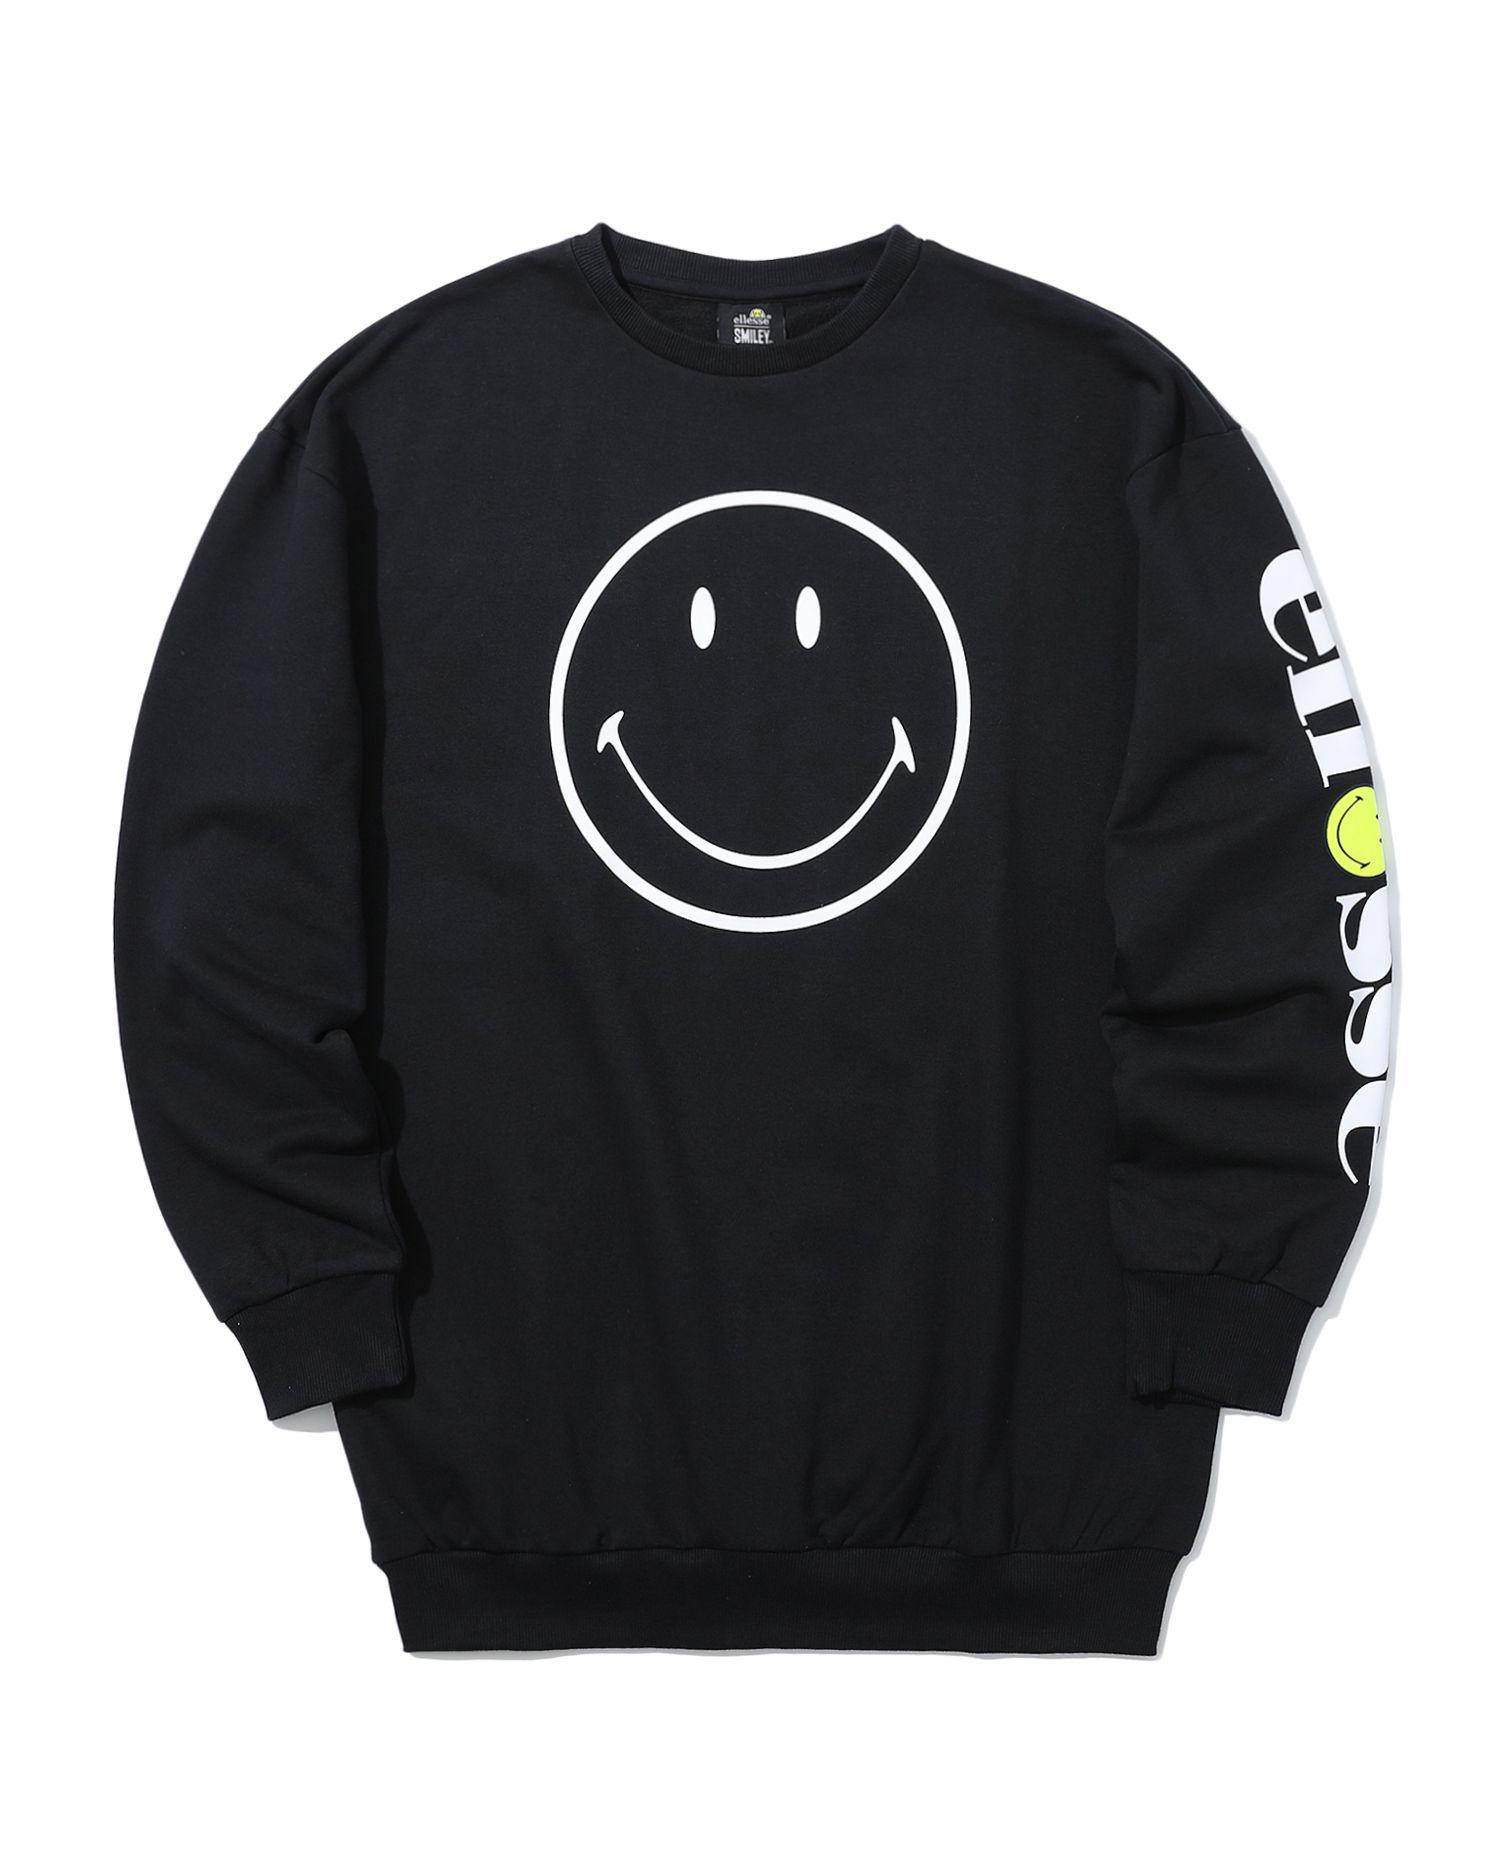 X Smiley logo sweatshirt by ELLESSE